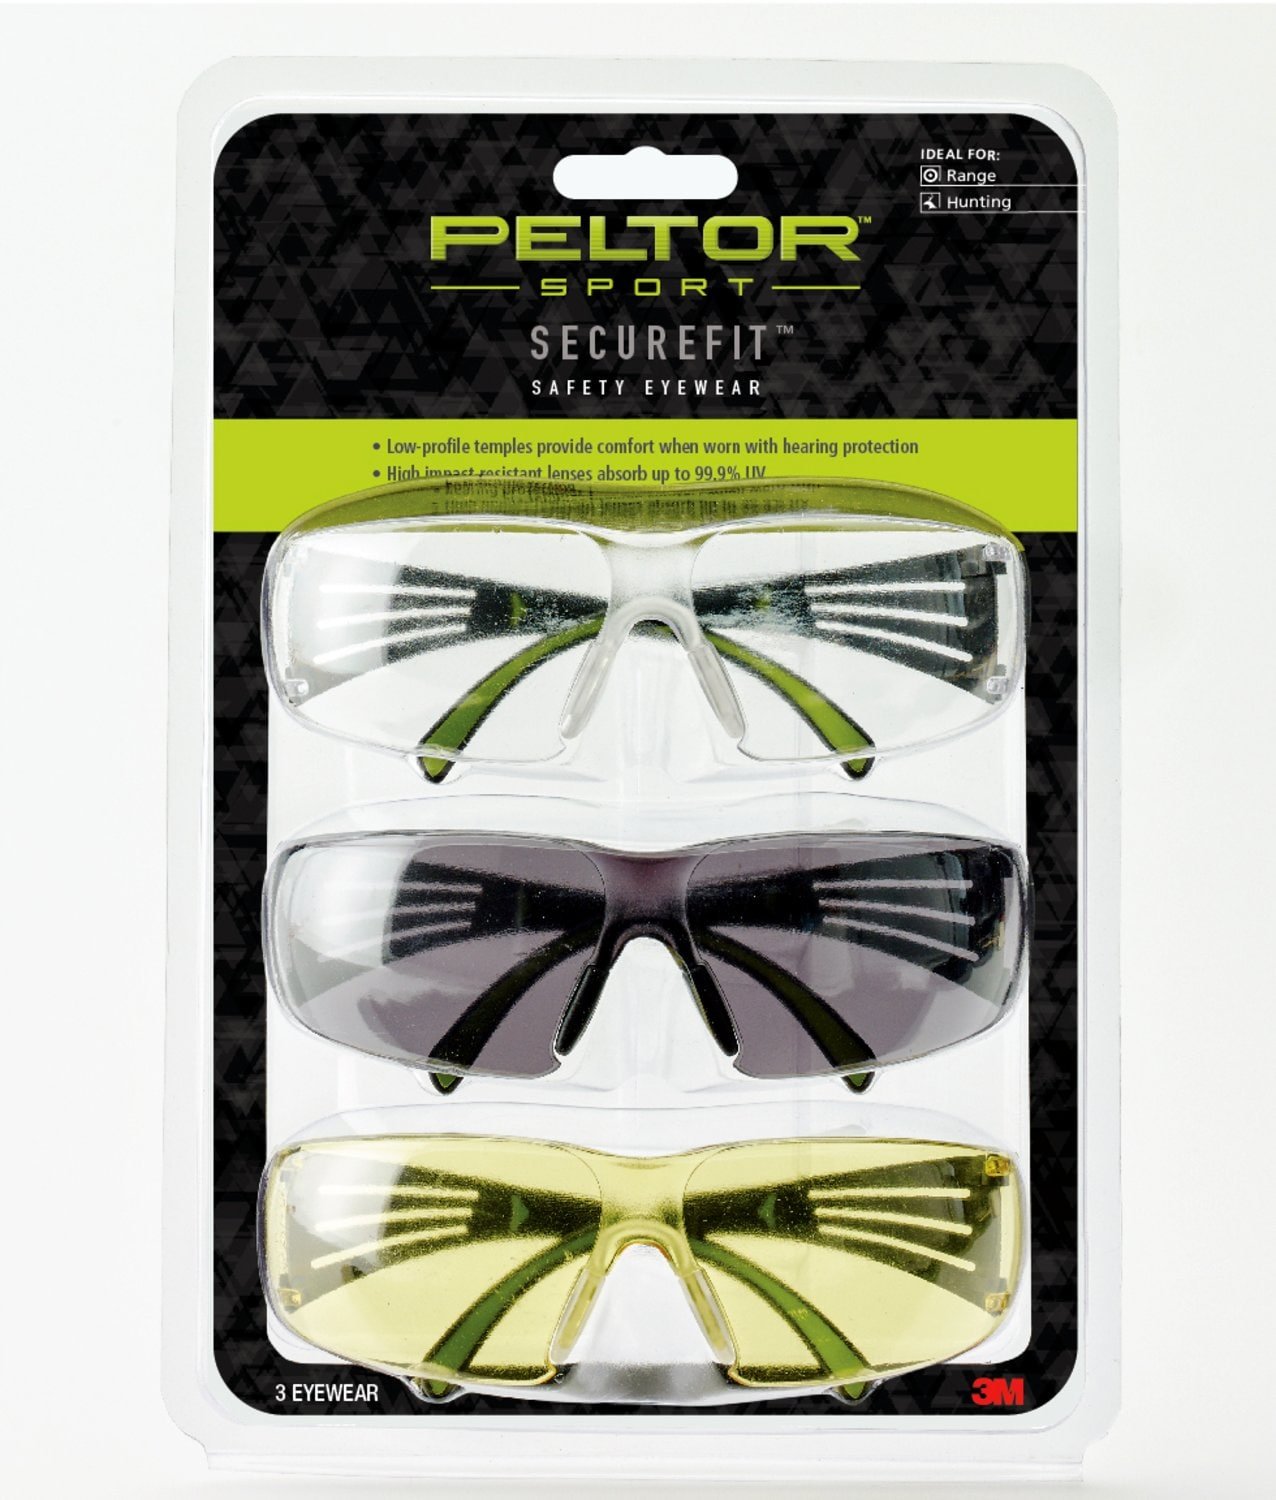 7100252973 - Peltor Sport SecureFit Safety Eyewear, SF400-P3PK-6, 3 Pack: Clear + Amber + Gray Lenses, AF, 6pk/cs